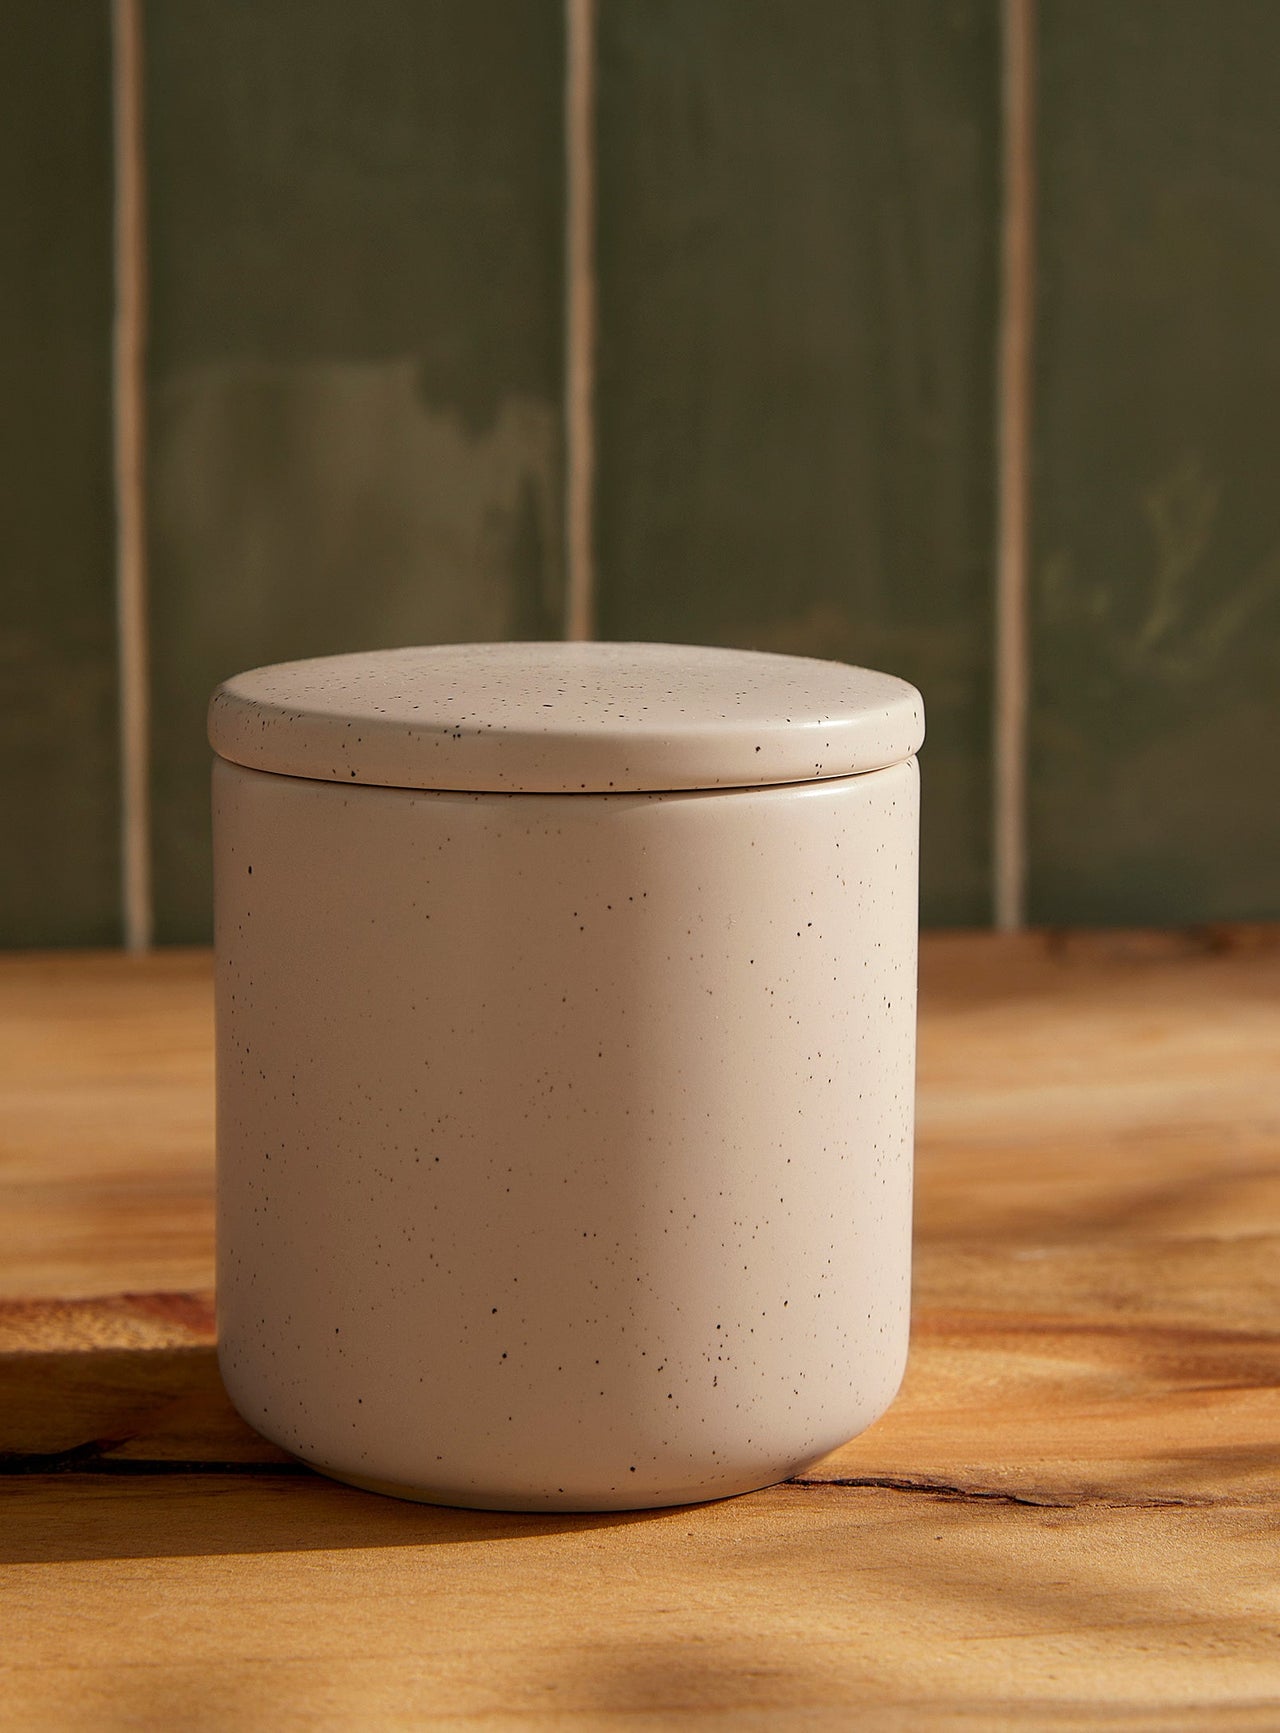 Speckled sand-coloured decorative jar